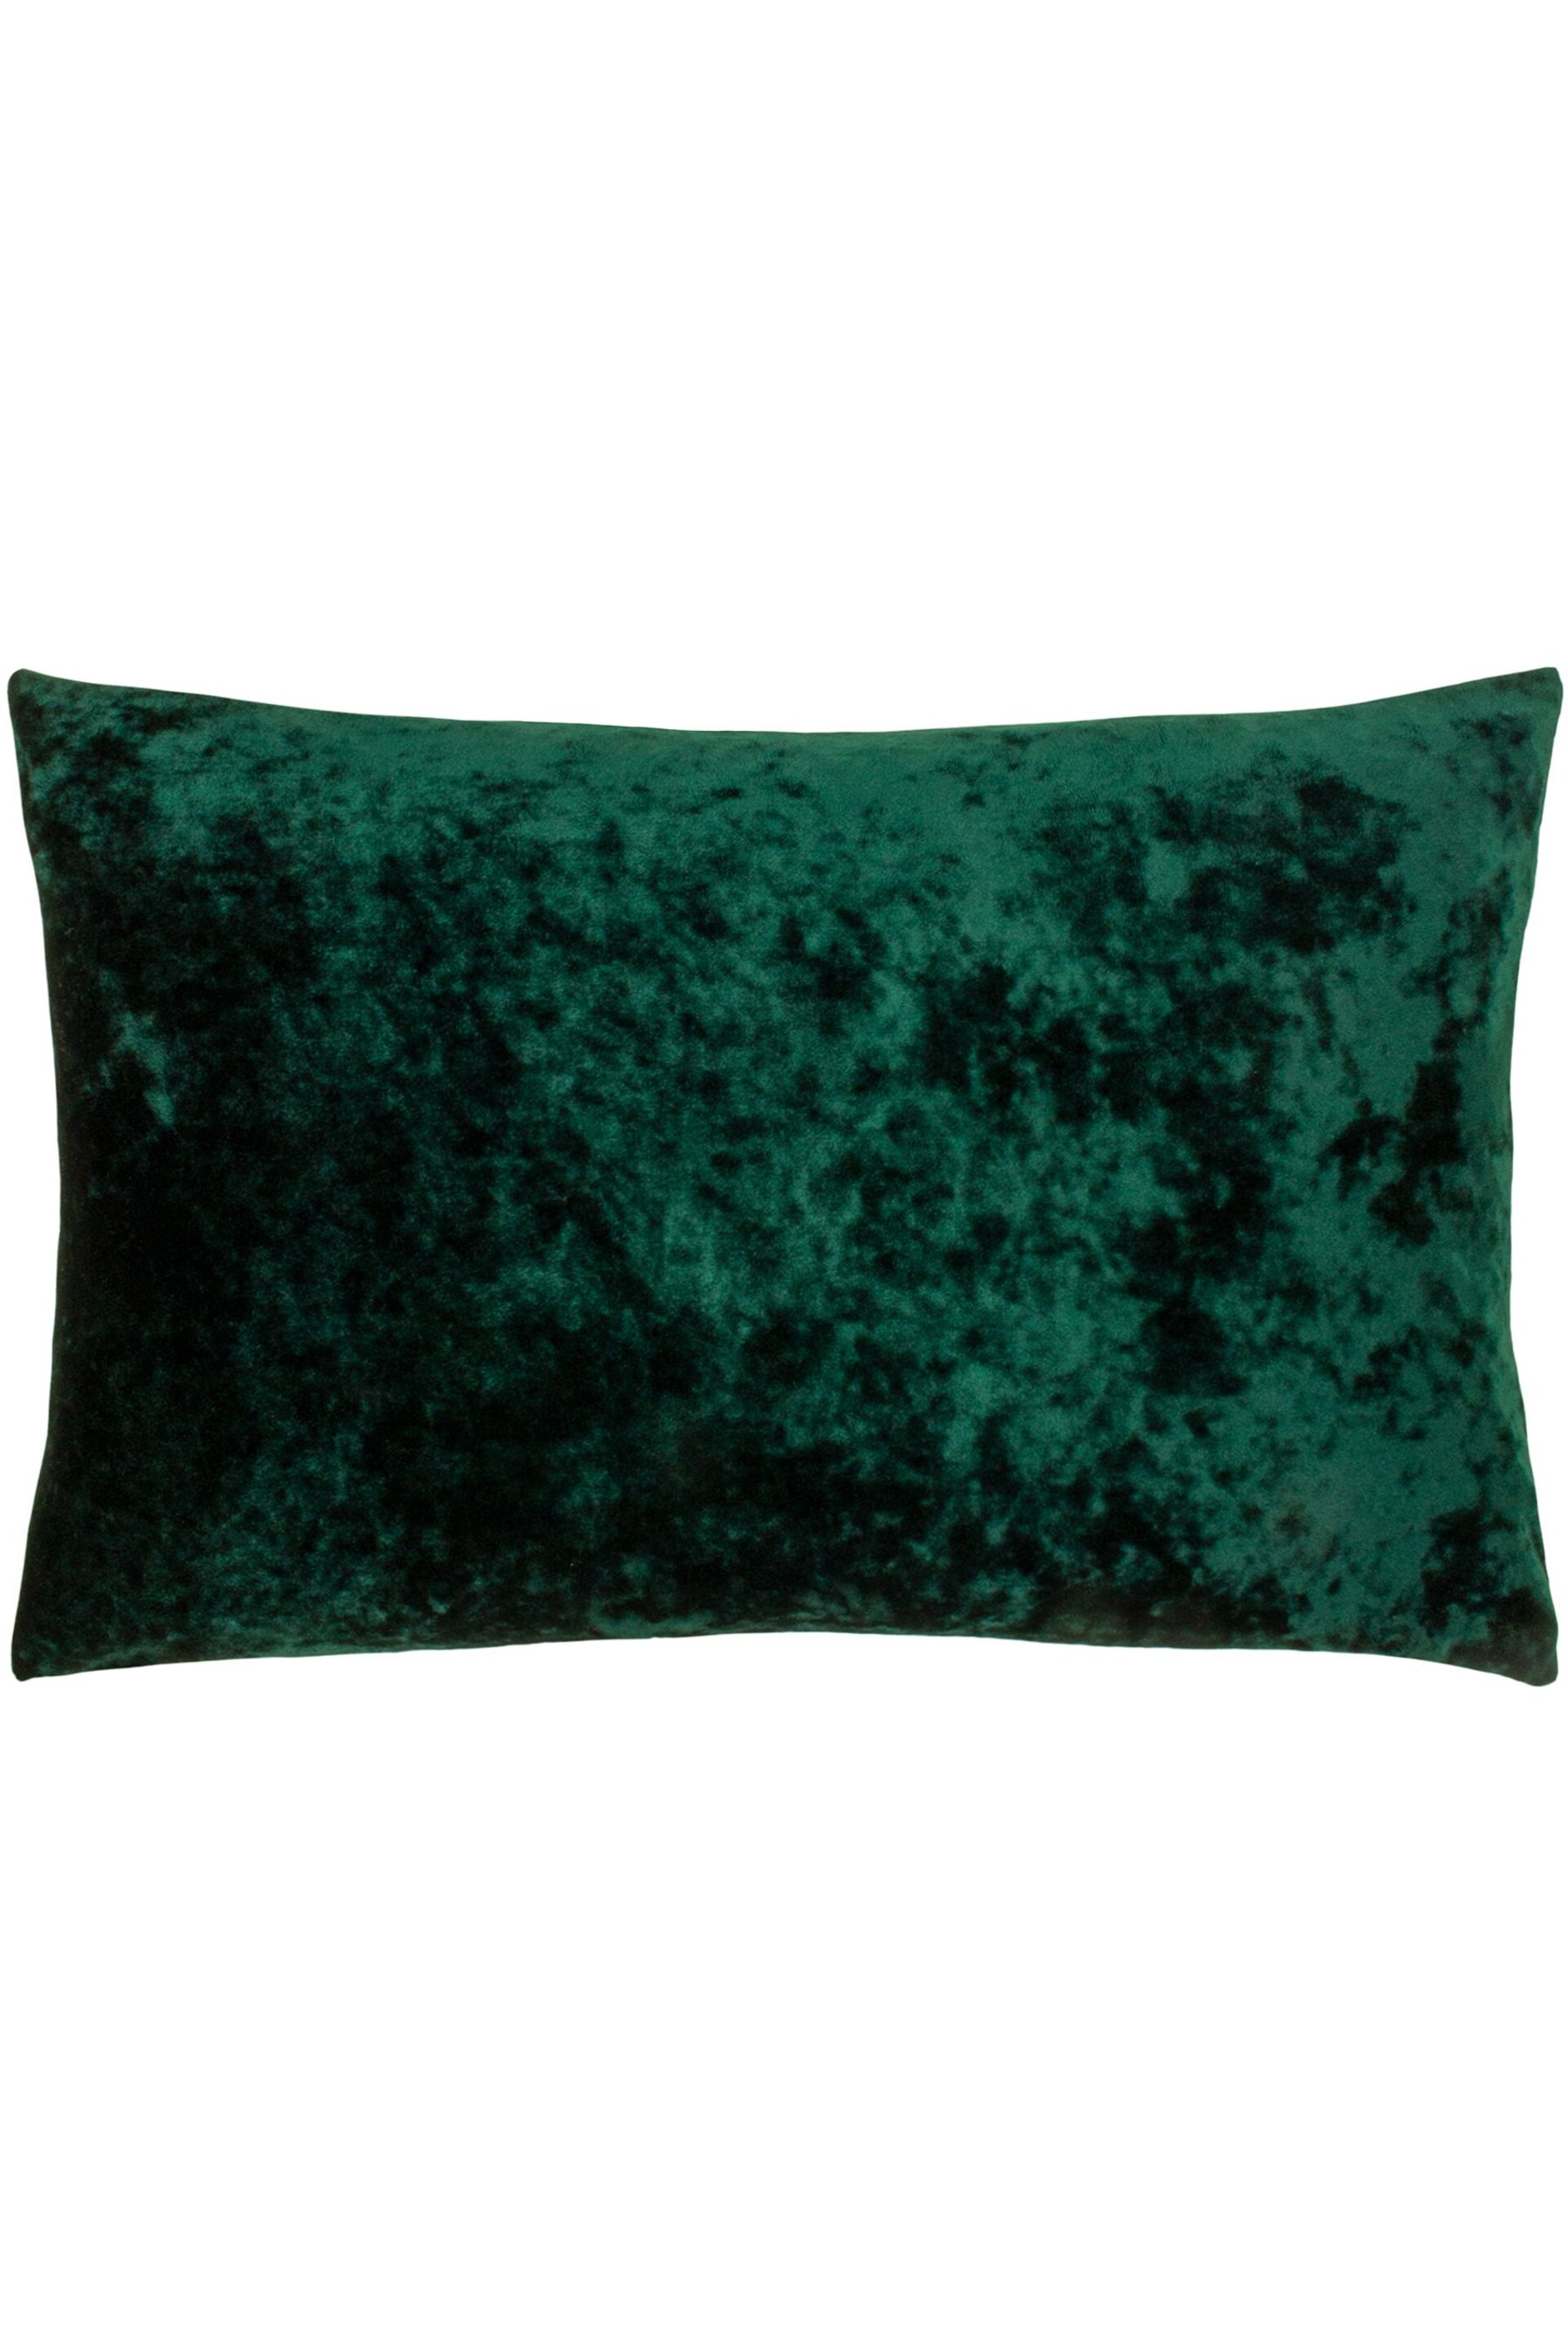 Riva Paoletti Emerald Green Verona Crushed Velvet Rectangular Polyester Filled Cushion - Image 1 of 2